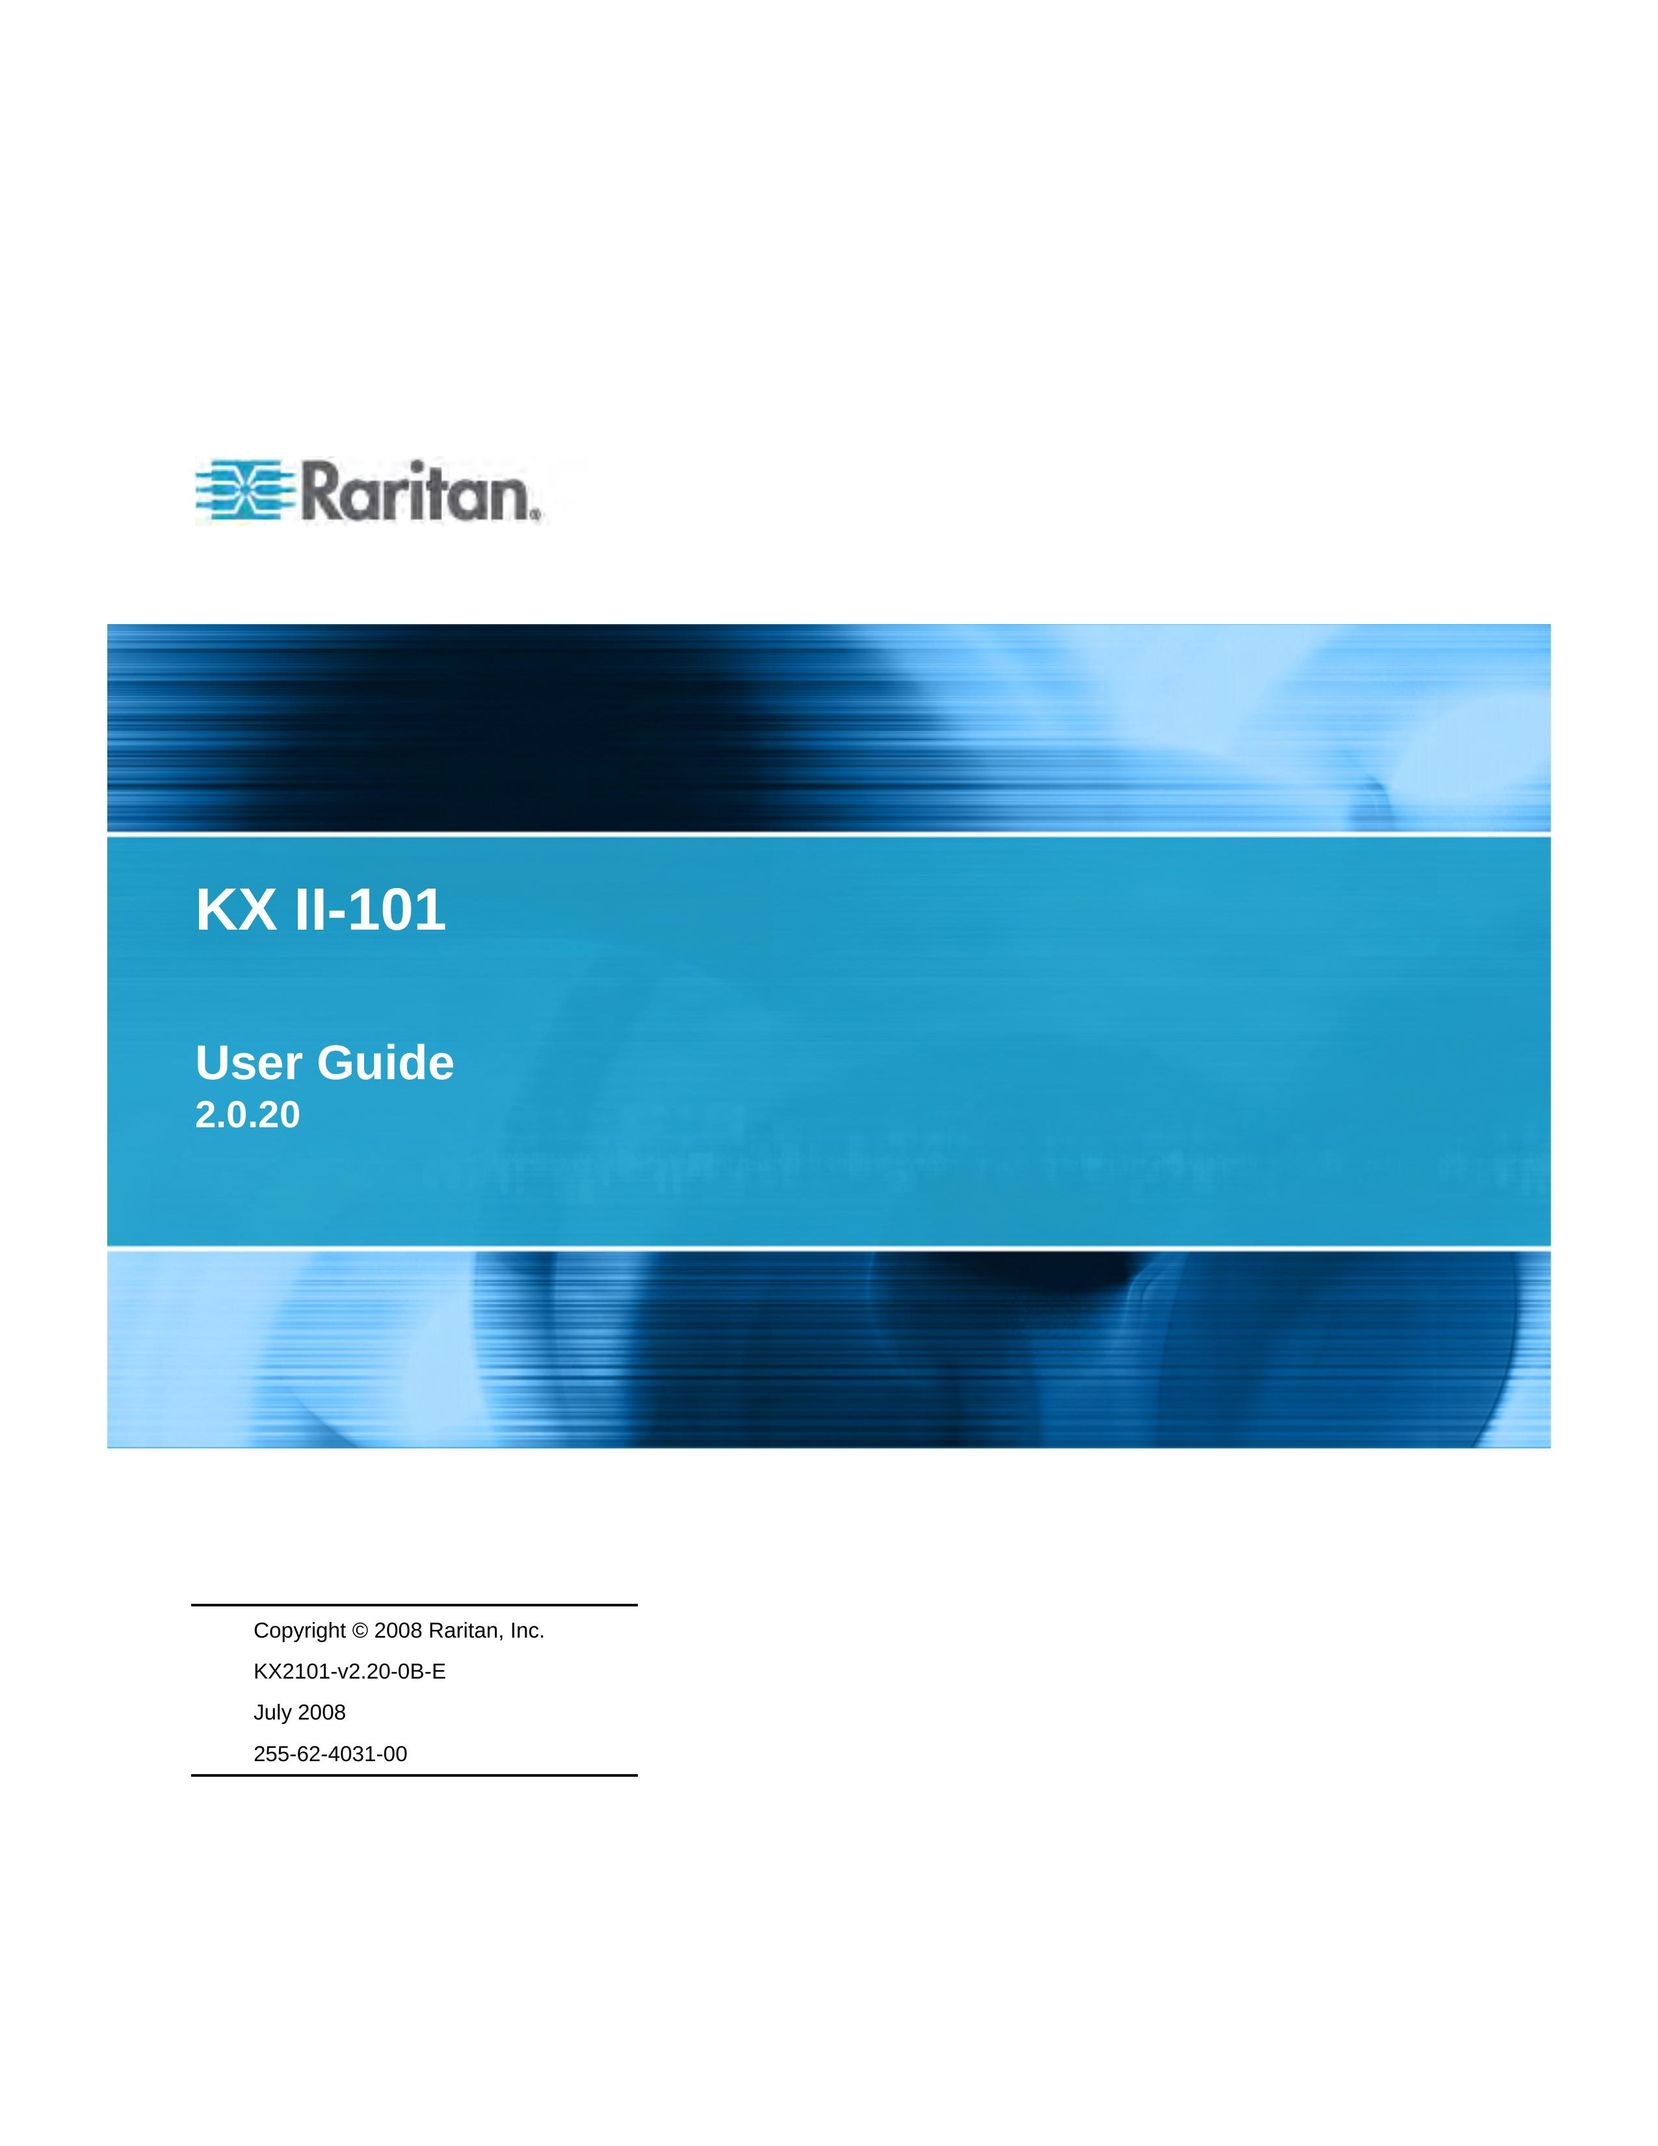 Raritan Computer KX2101-v2.20-0B-E Home Theater Server User Manual